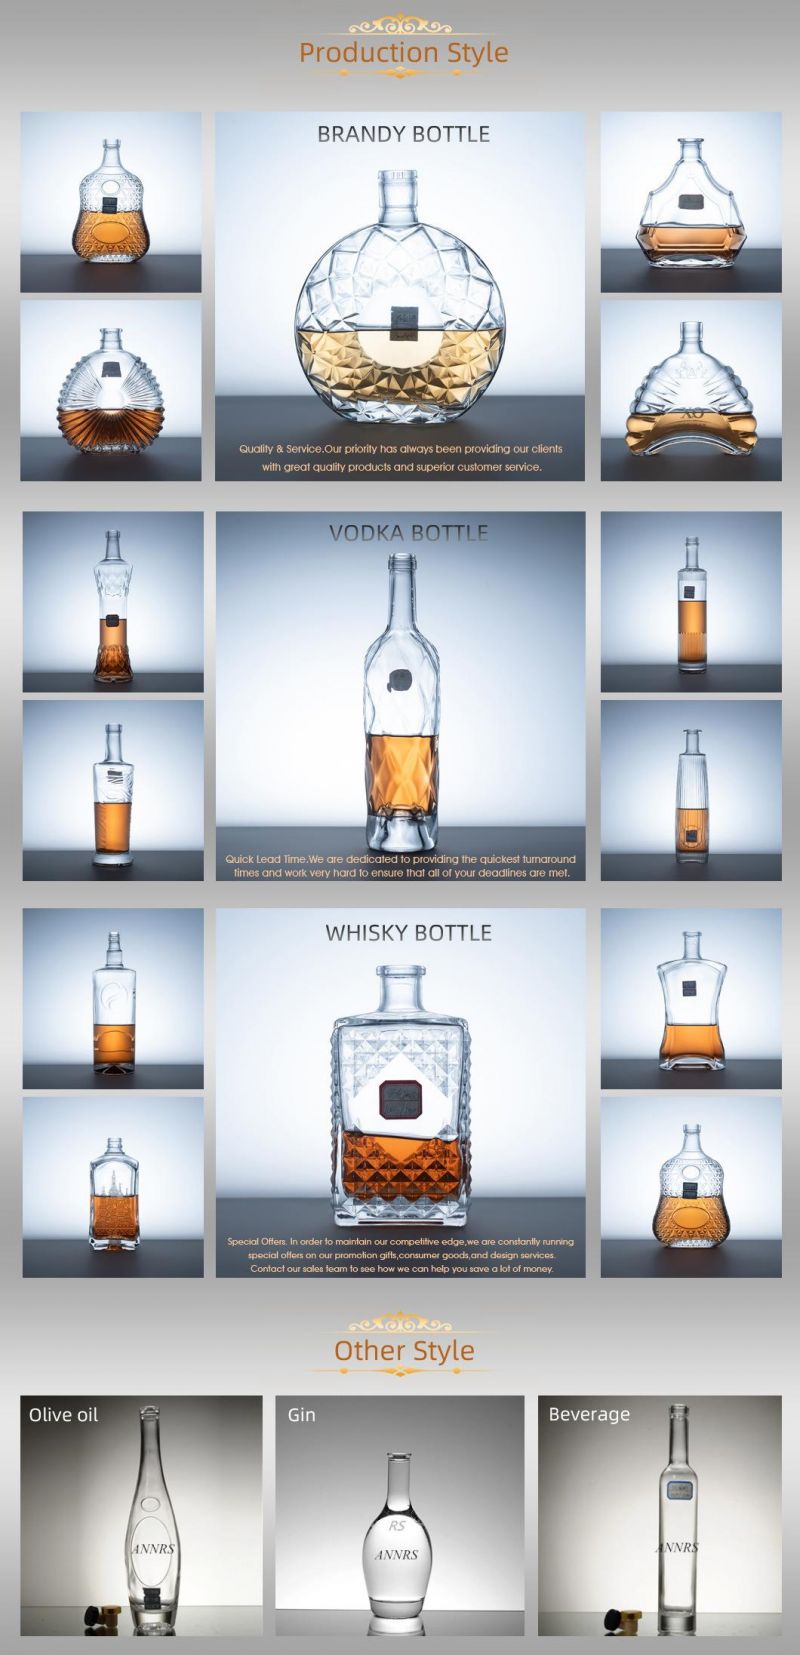 Premium Empty Cylinder Spirit 750ml Whisky Glass Vodka Bottle Price 700ml 500ml Vodka for Sale